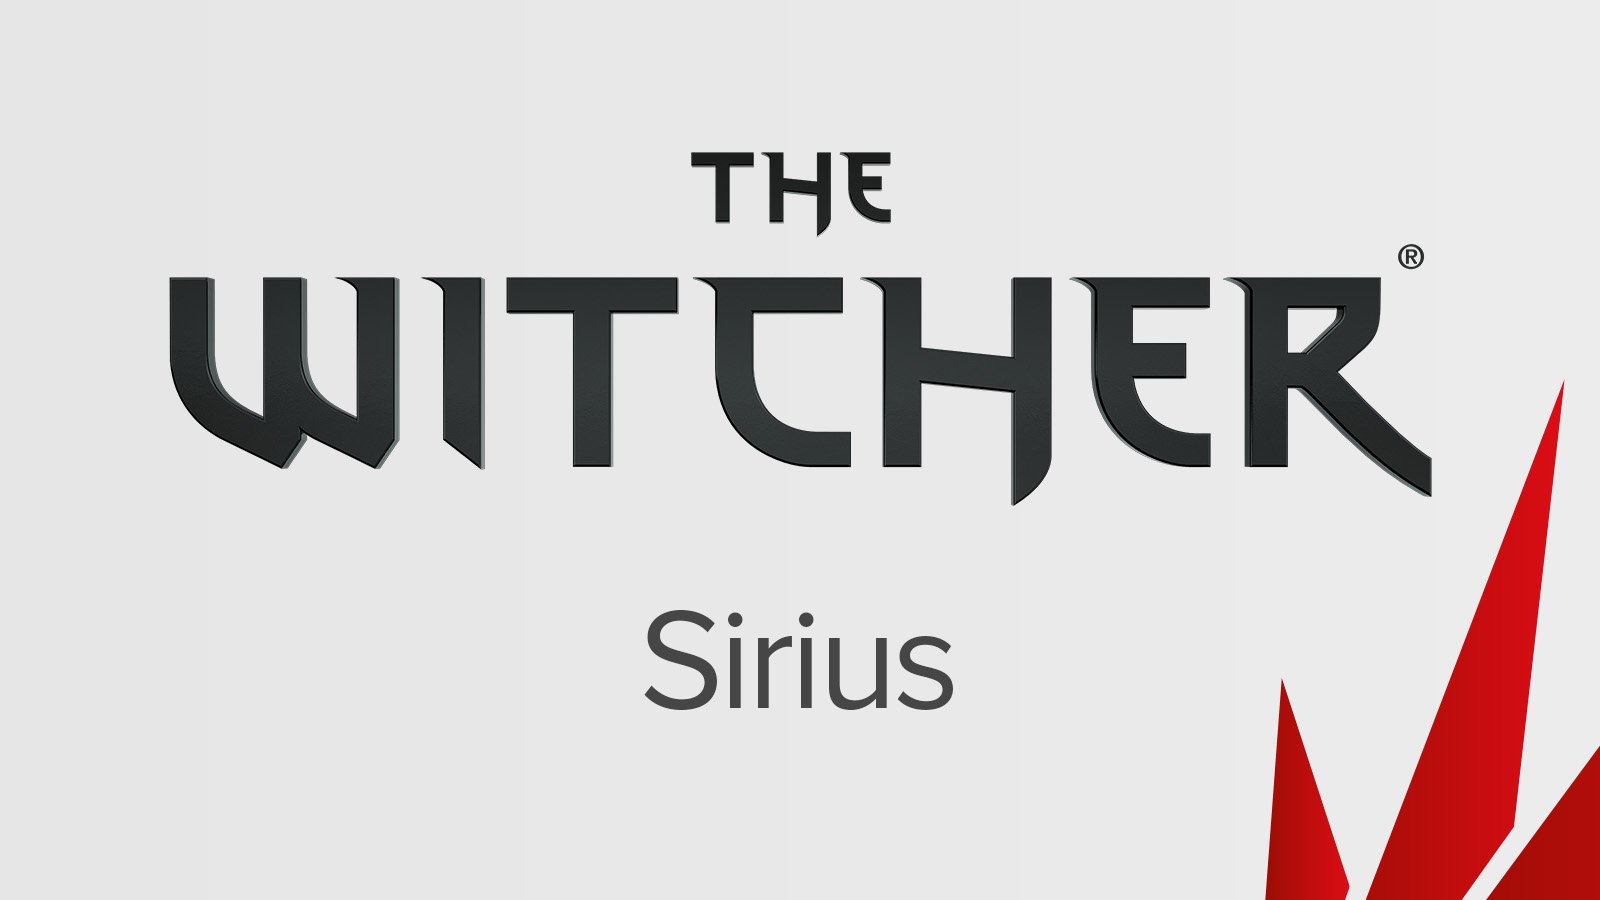 The Witcher Remake Has To Wait Until Work On Witcher 4 Has Begun